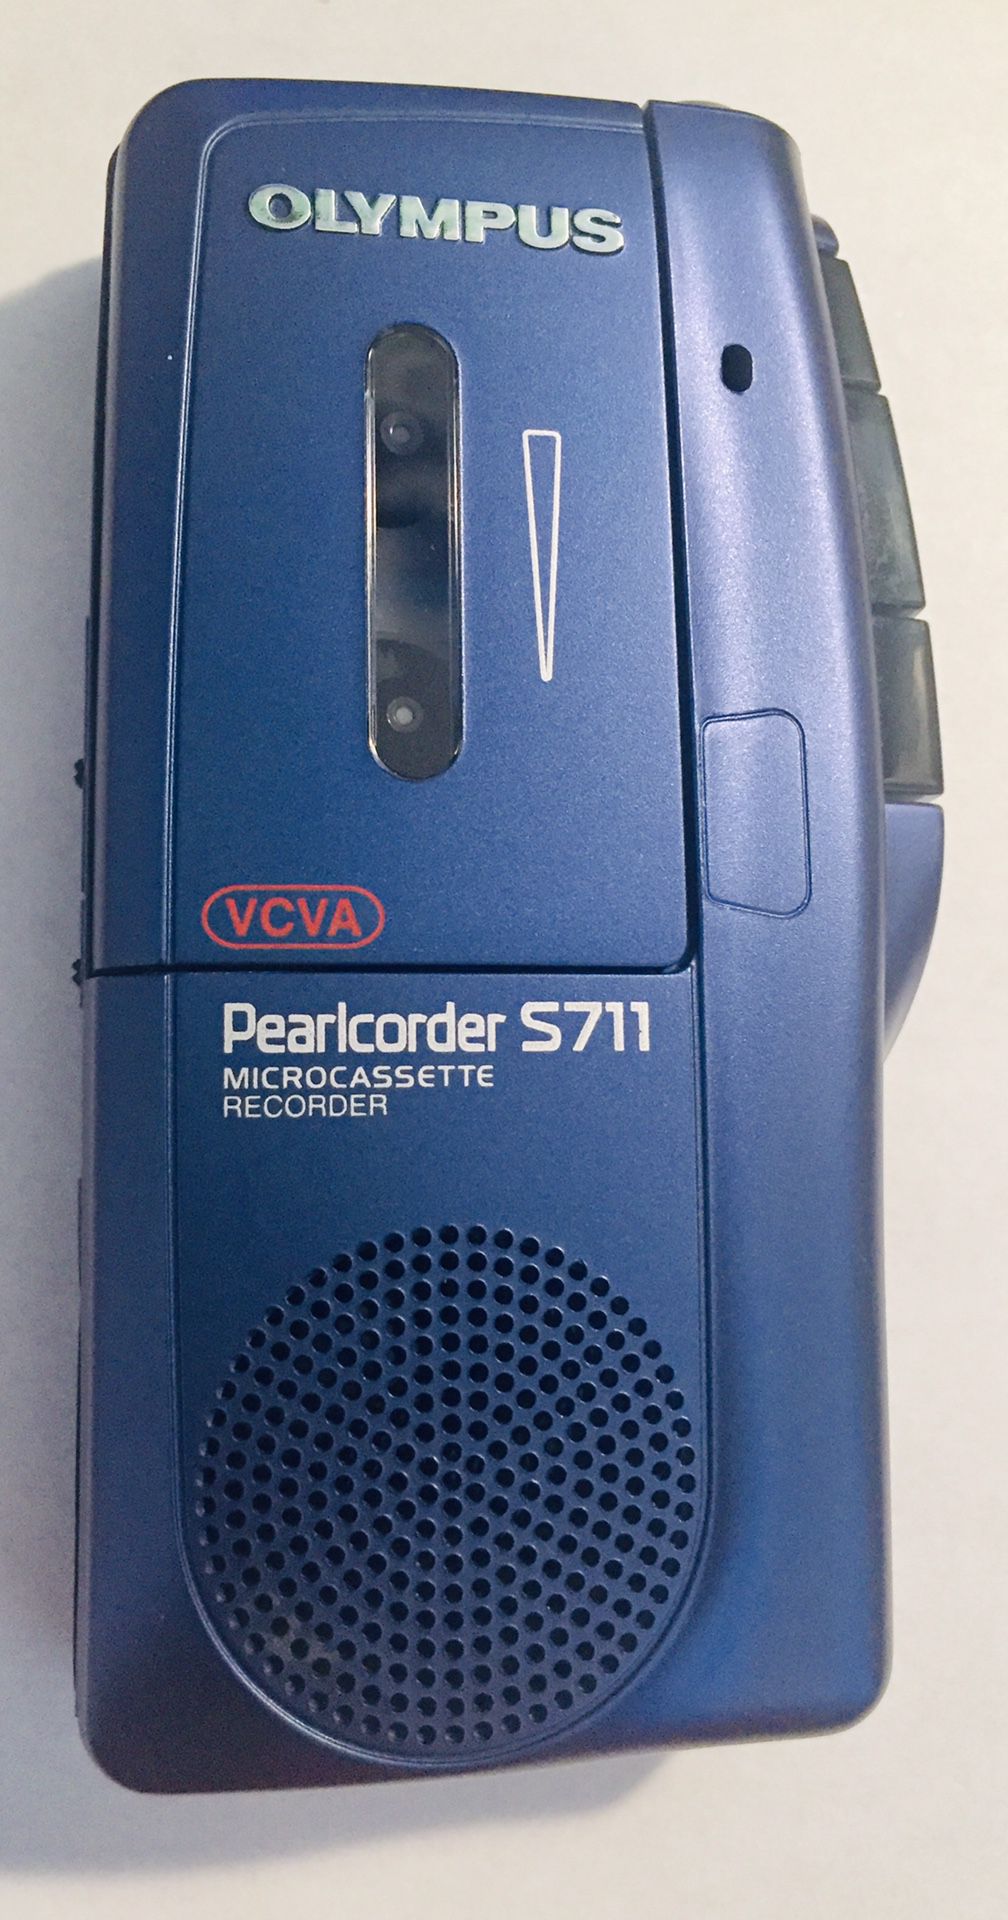 Olympus S711 Pearlcorder Microcassette Recorder Dictaphone VCVA W /4 CASSETTE